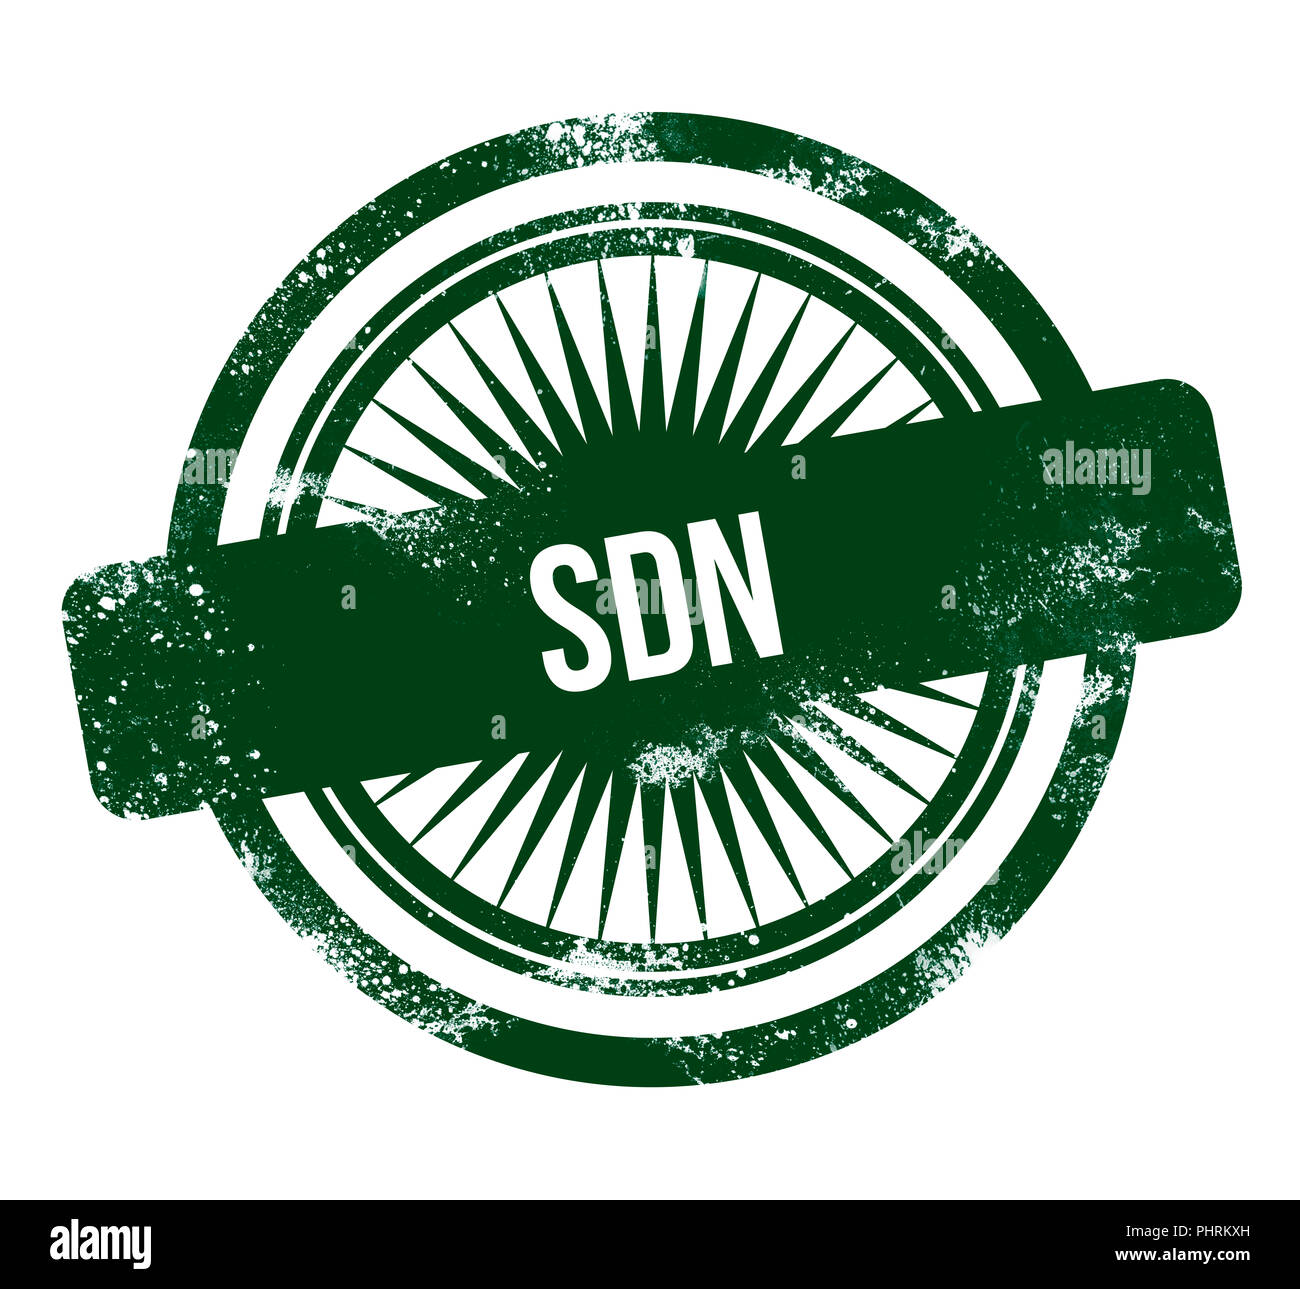 SDN - green grunge stamp Stock Photo